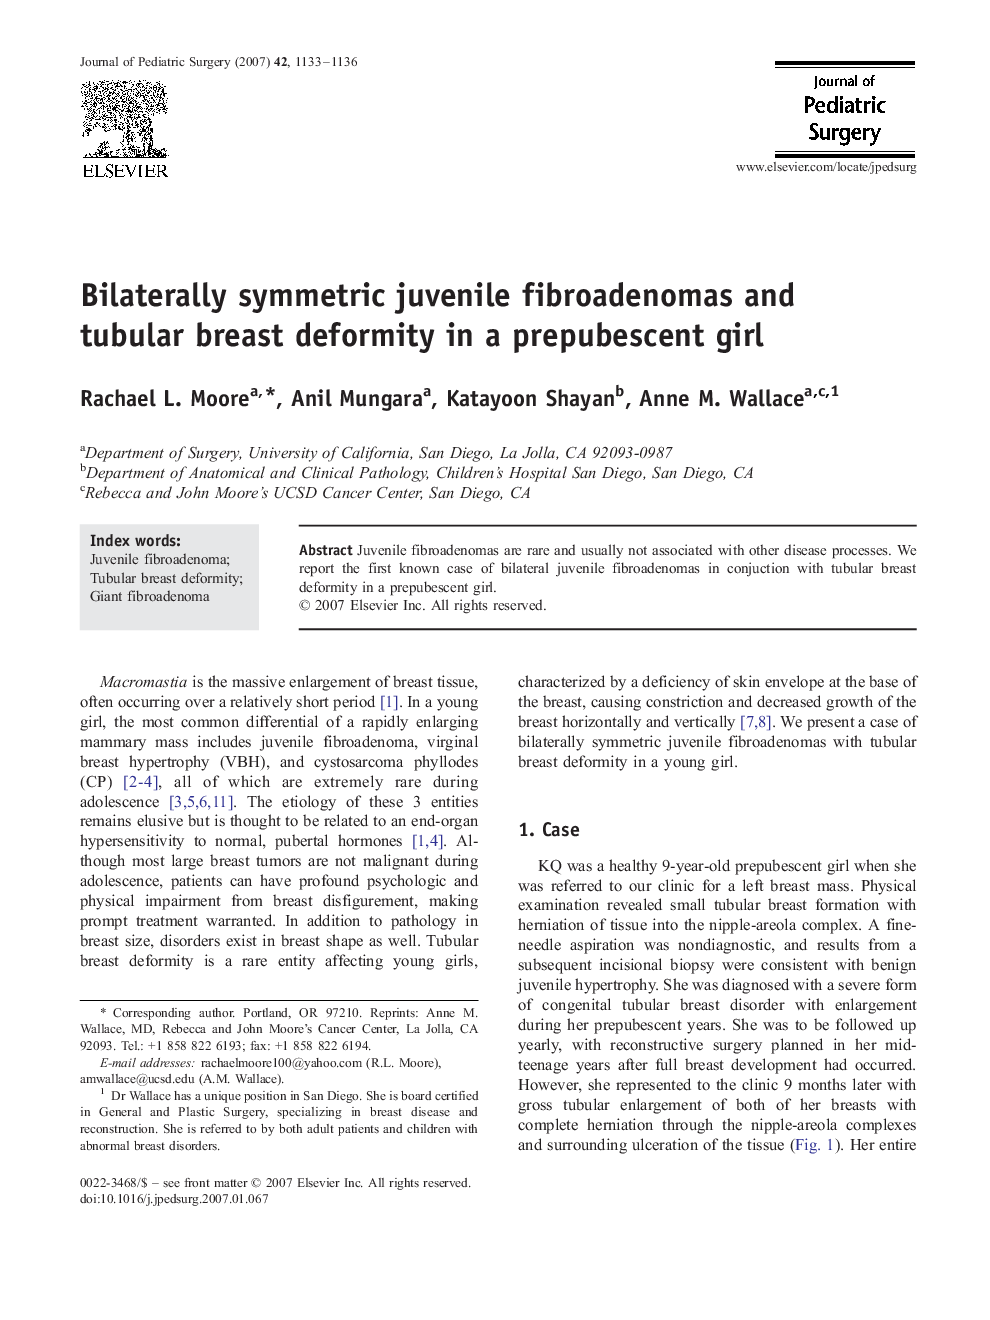 Bilaterally symmetric juvenile fibroadenomas and tubular breast deformity in a prepubescent girl